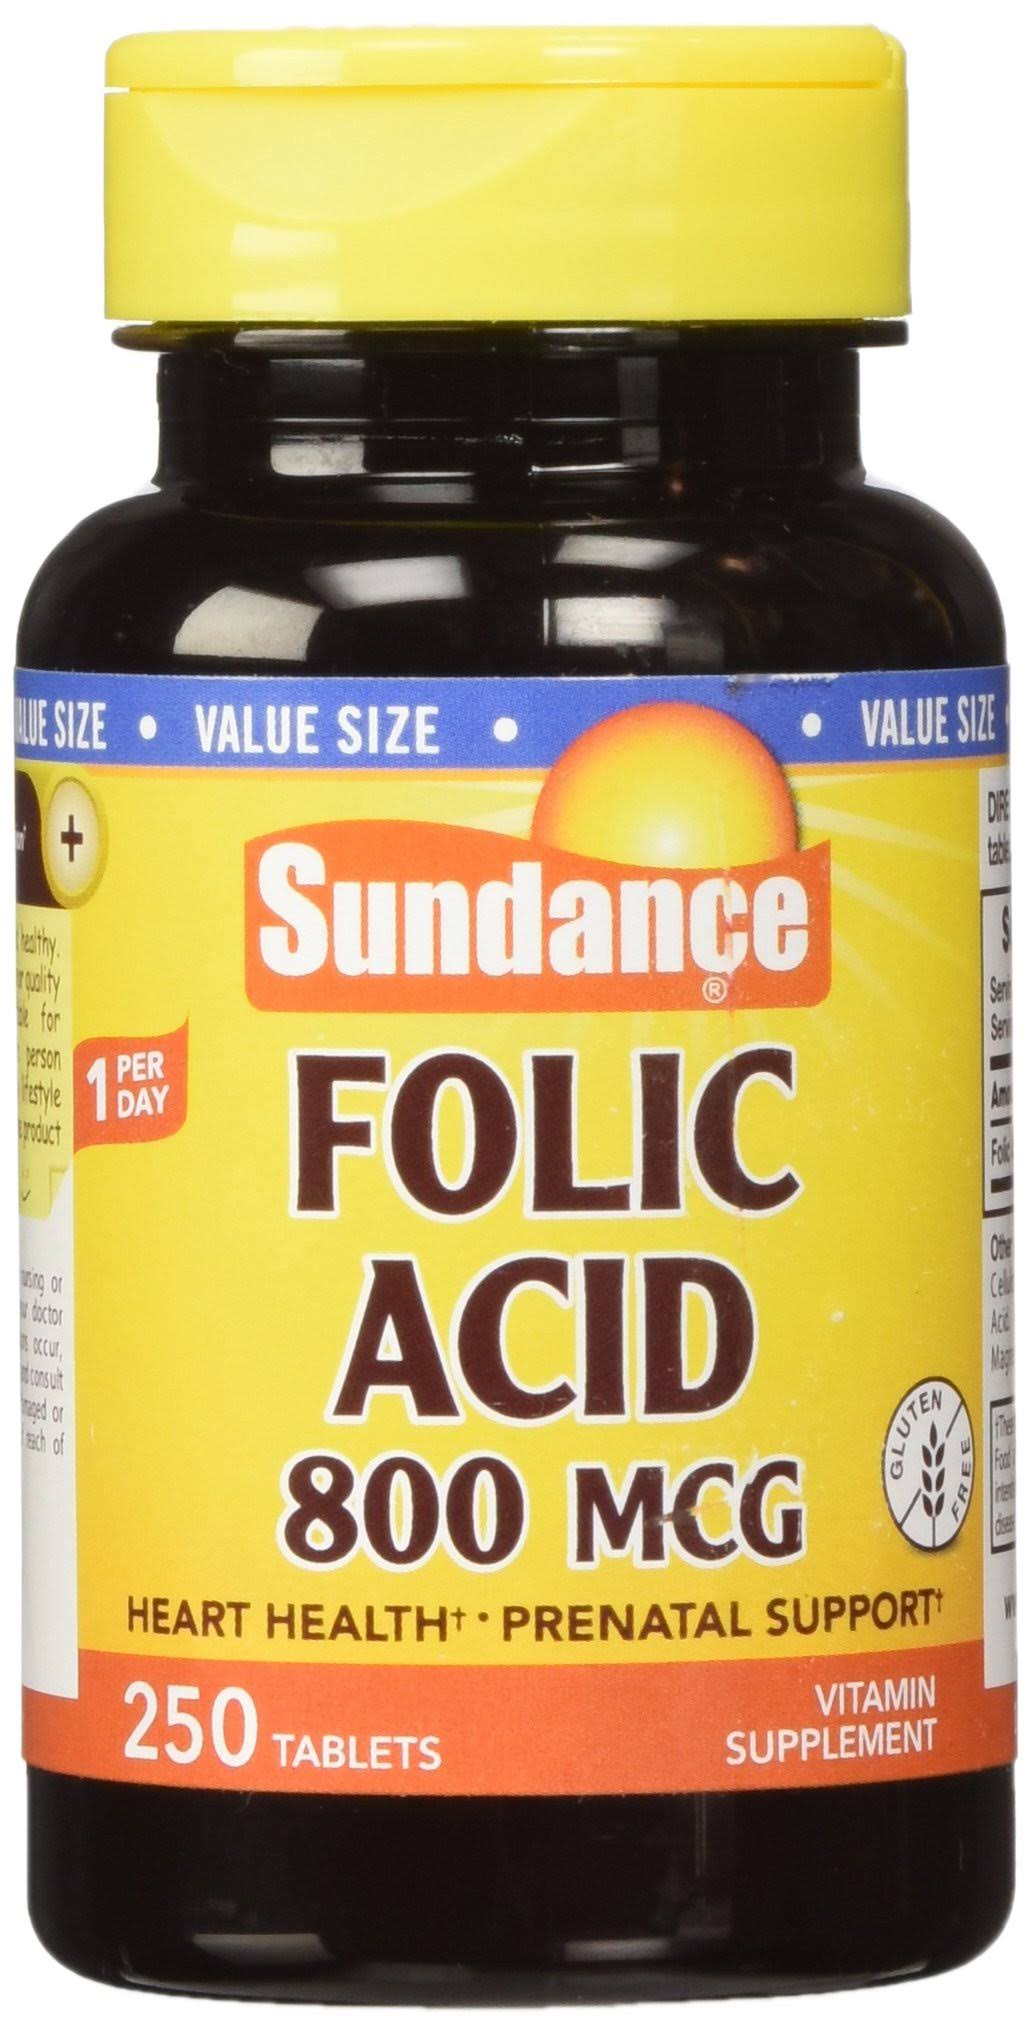 Sundance Folic Acid Vitamin Supplement - 250 Tablets